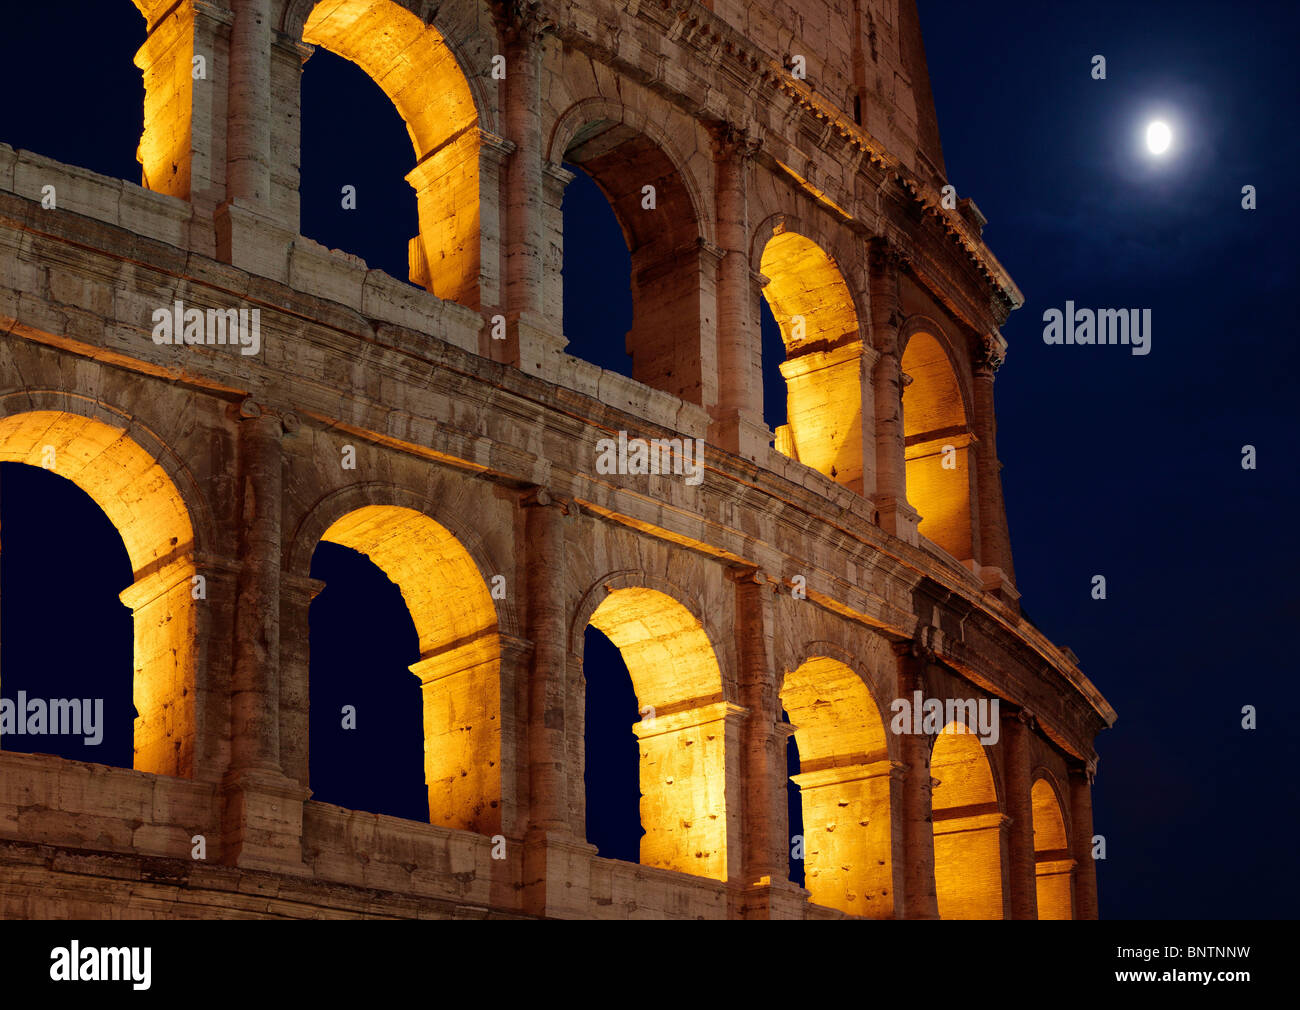 Das Kolosseum oder Roman Coliseum, in Rom, Italien ist nachts beleuchtet Stockfoto